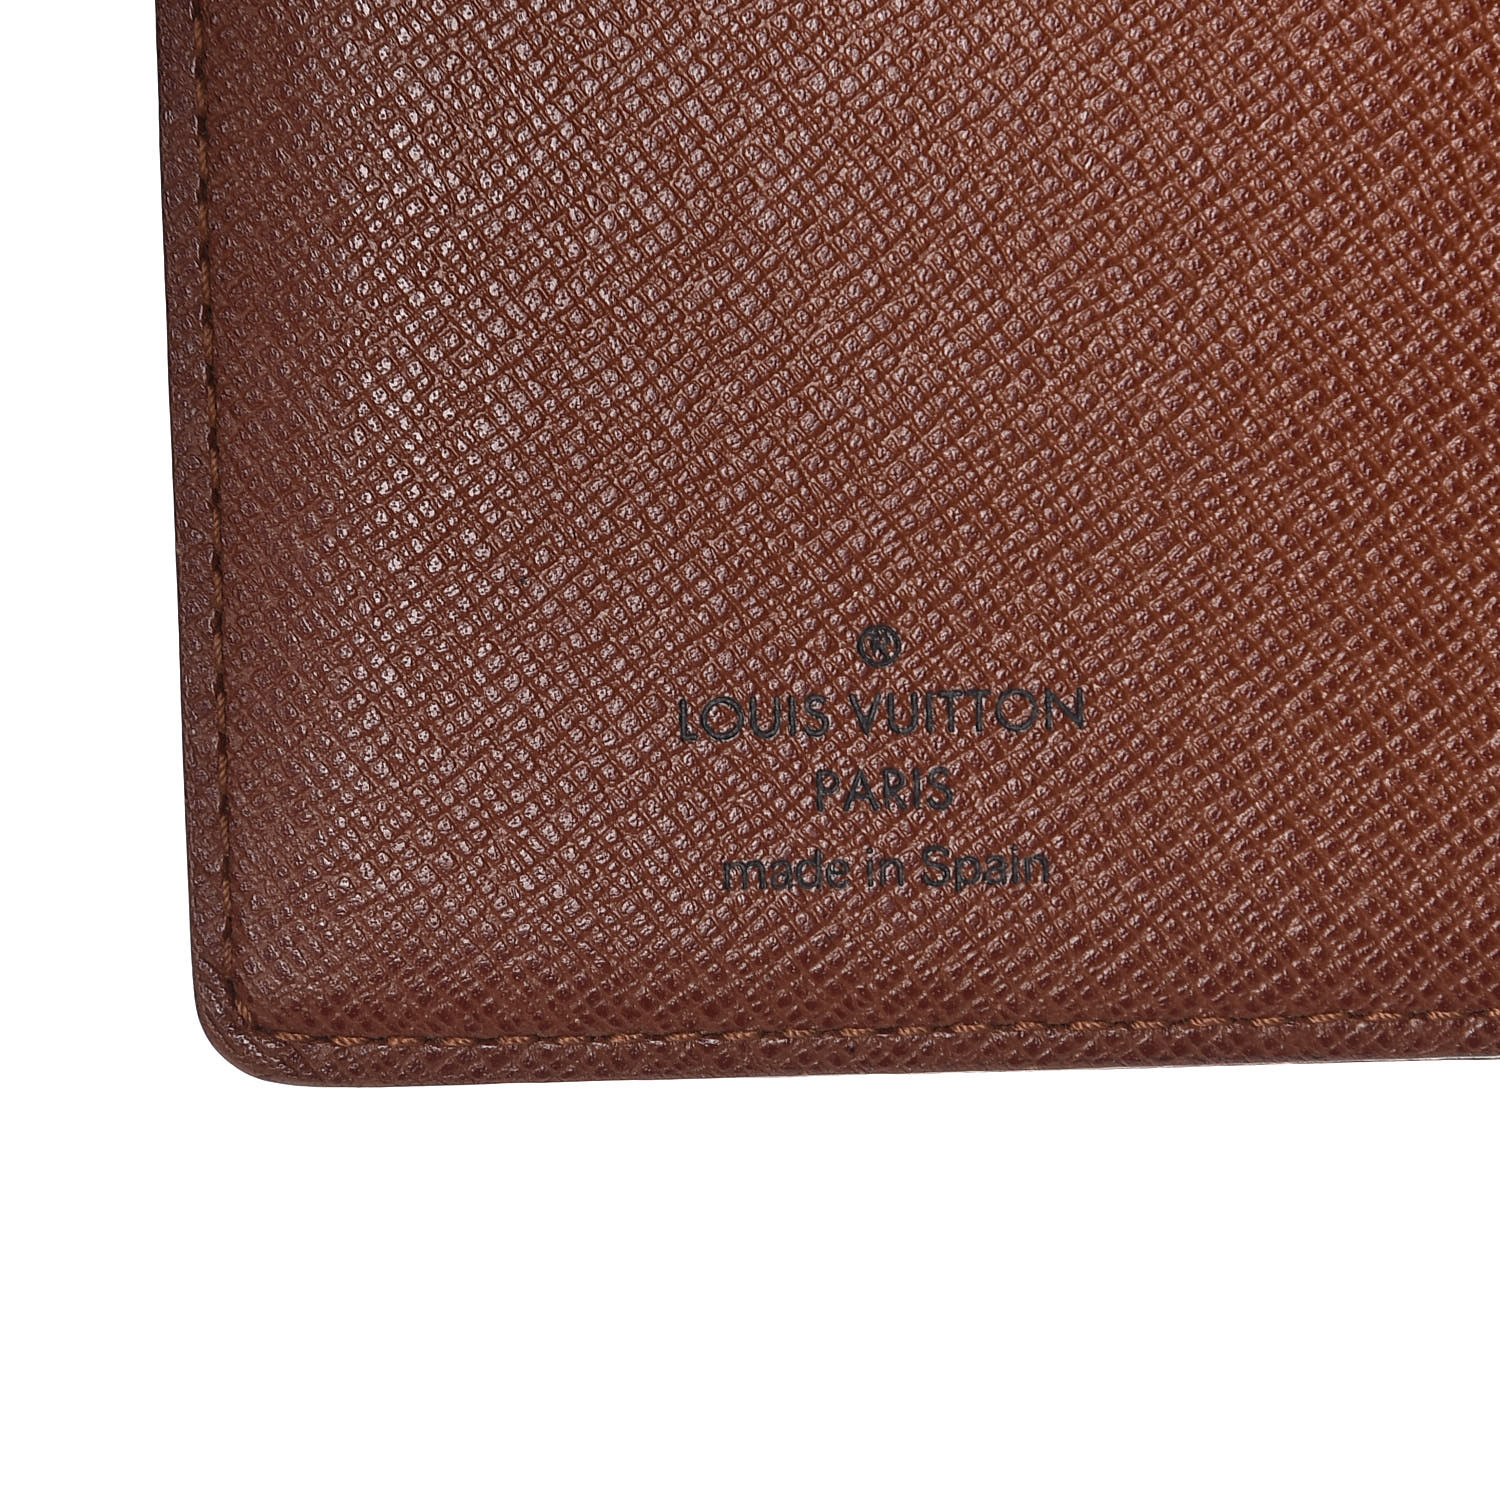 Louis VUITTON : wallet, card holder and checkbook holder…